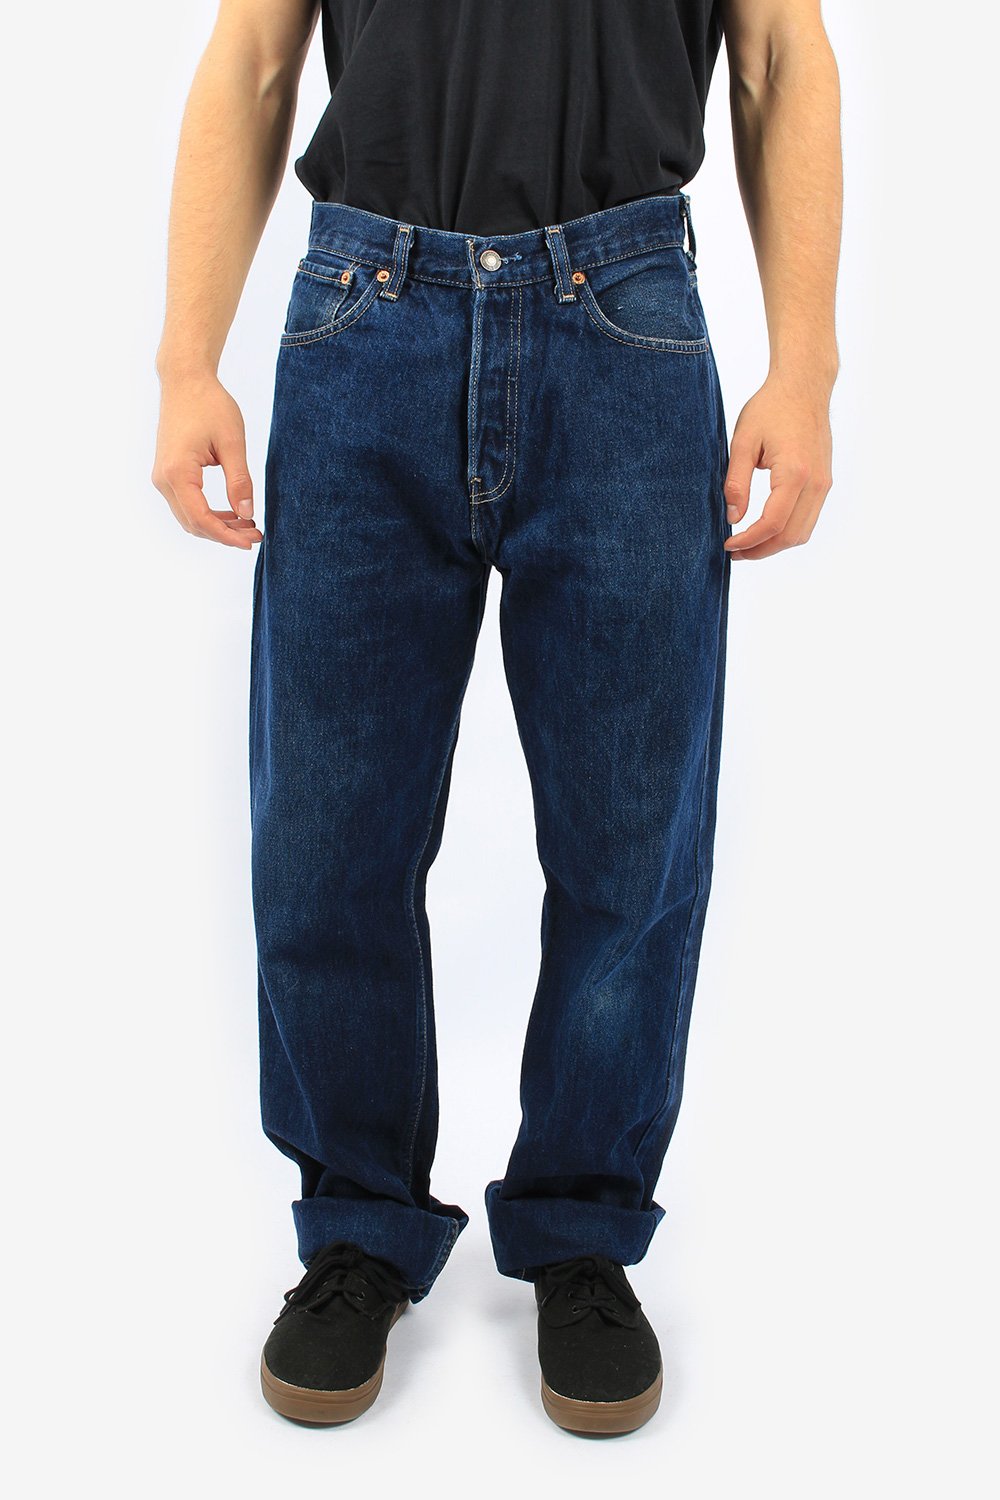 Levis 582 Jeans Regular Fit Straight Leg Mens – Pepper Tree London